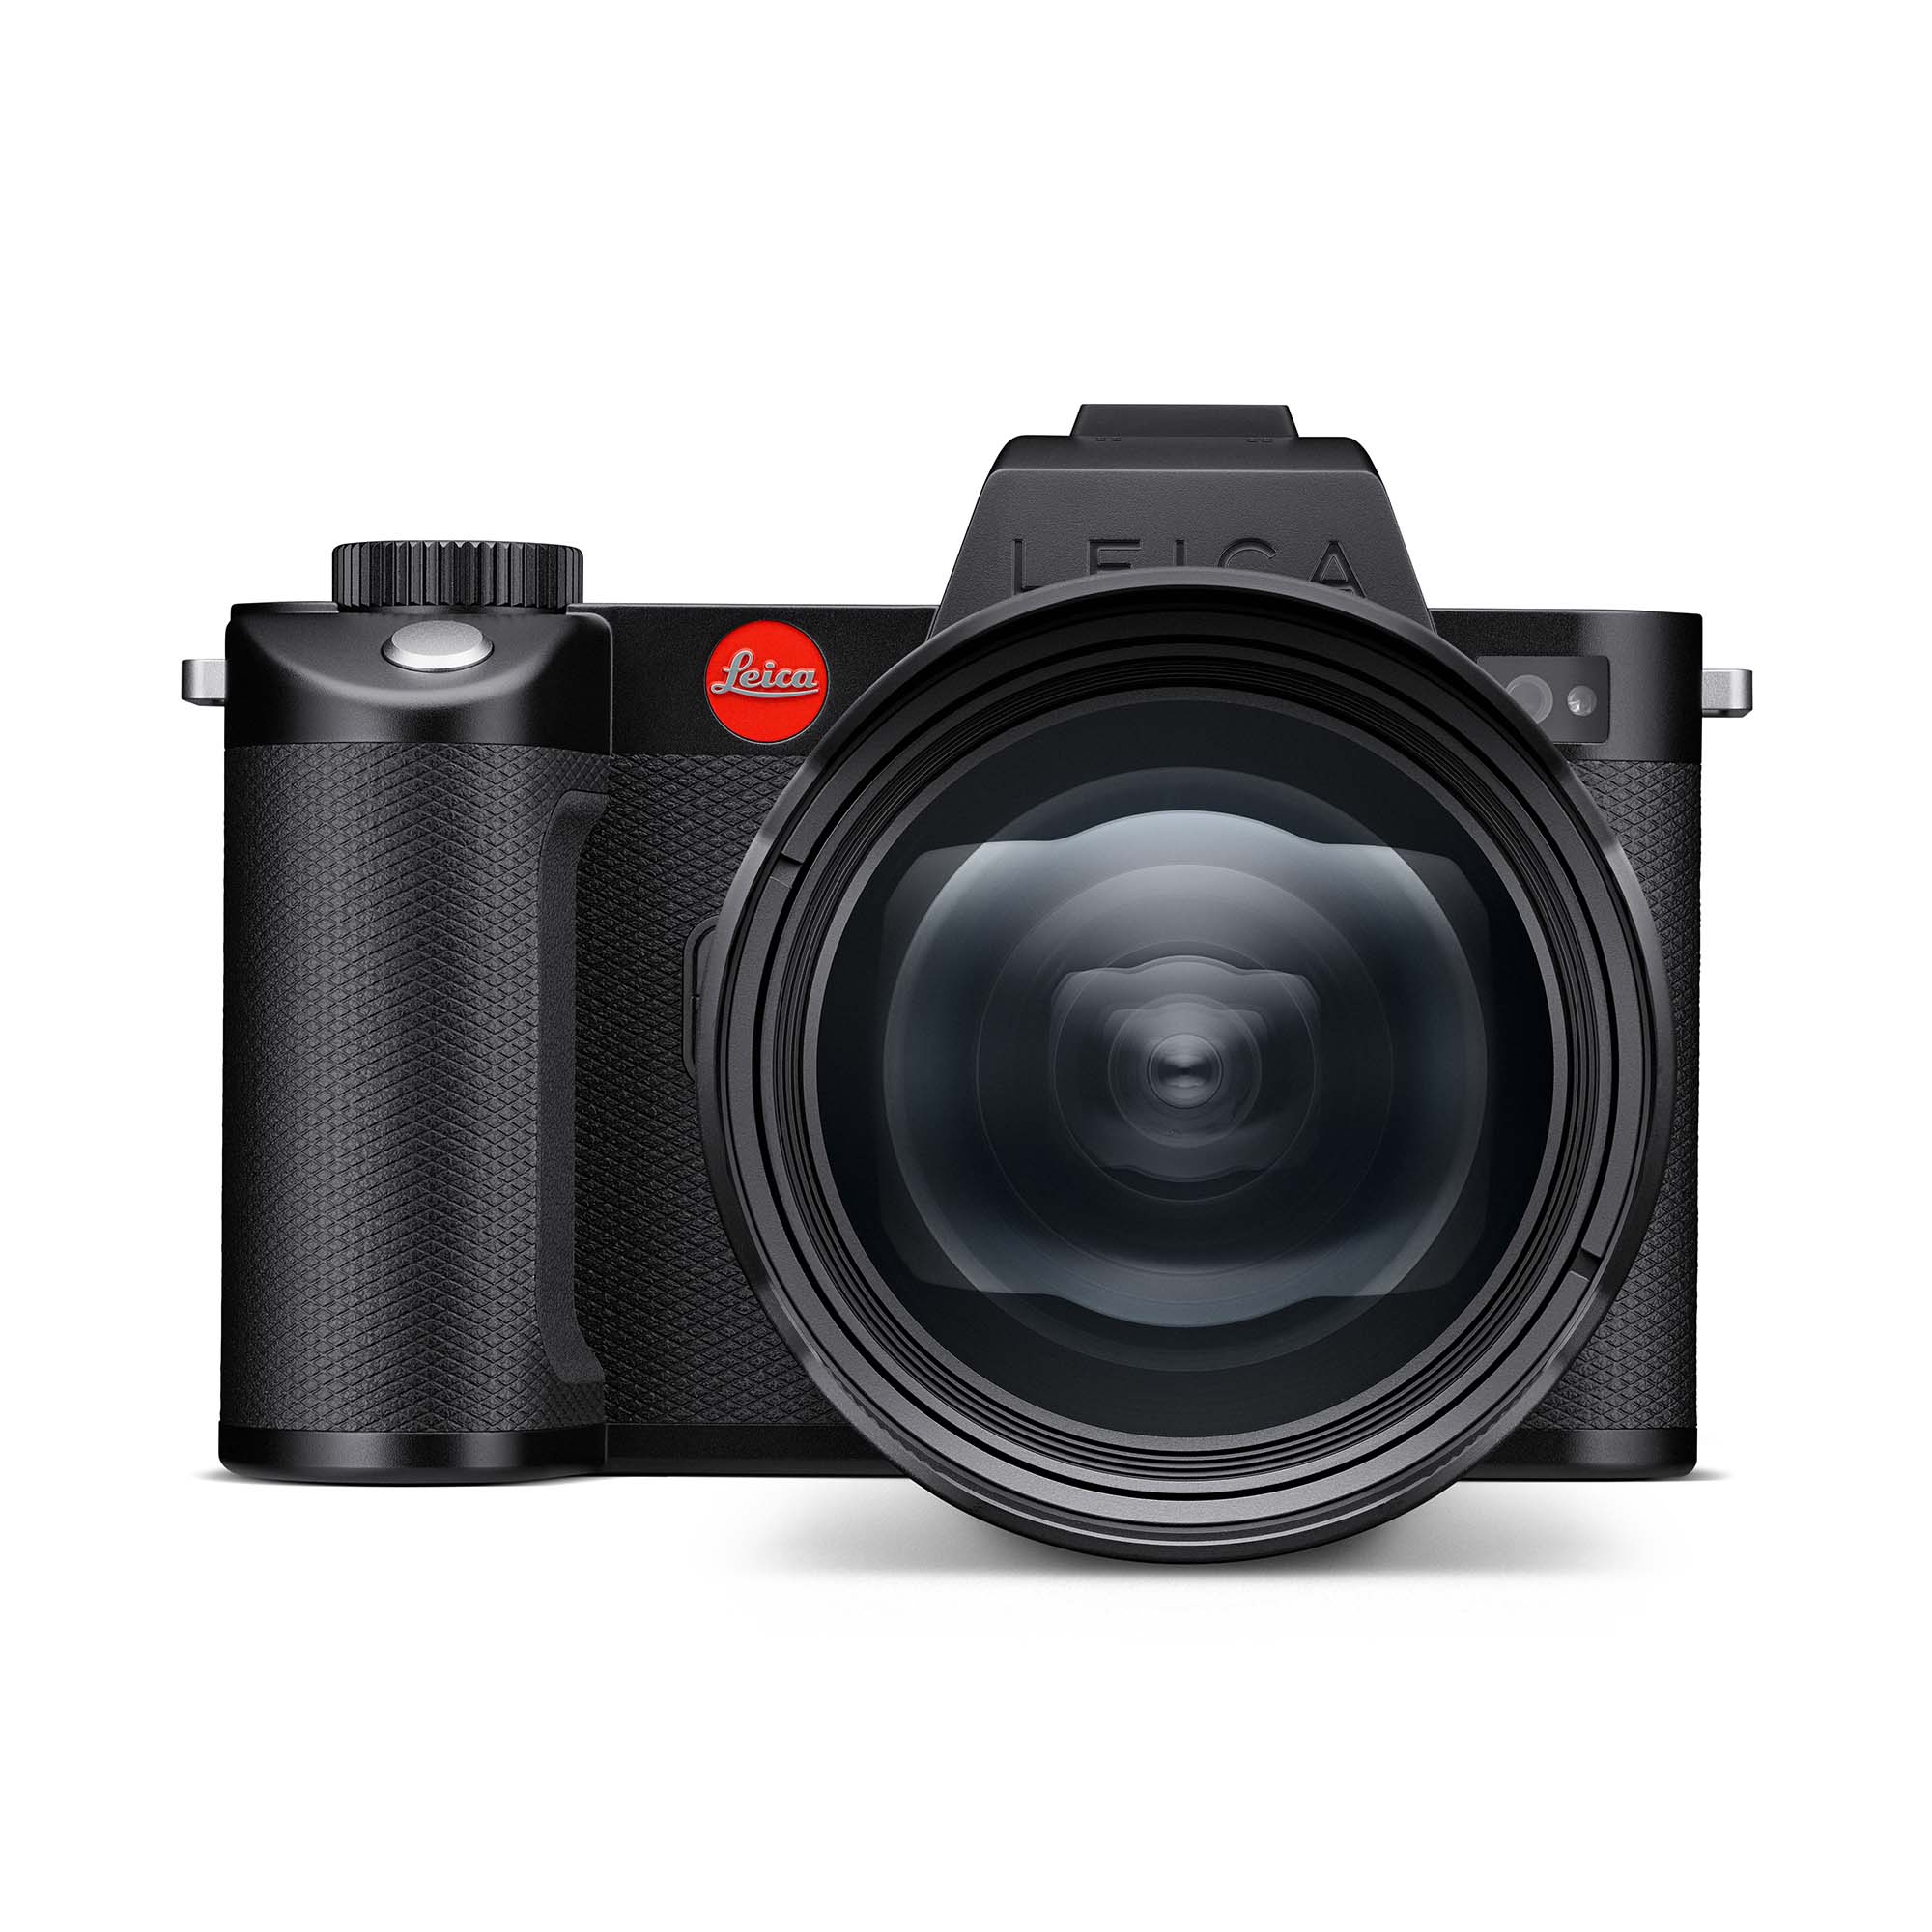 Leica Super-Vario-Elmarit-SL 14-24mm f/2,8 ASPH